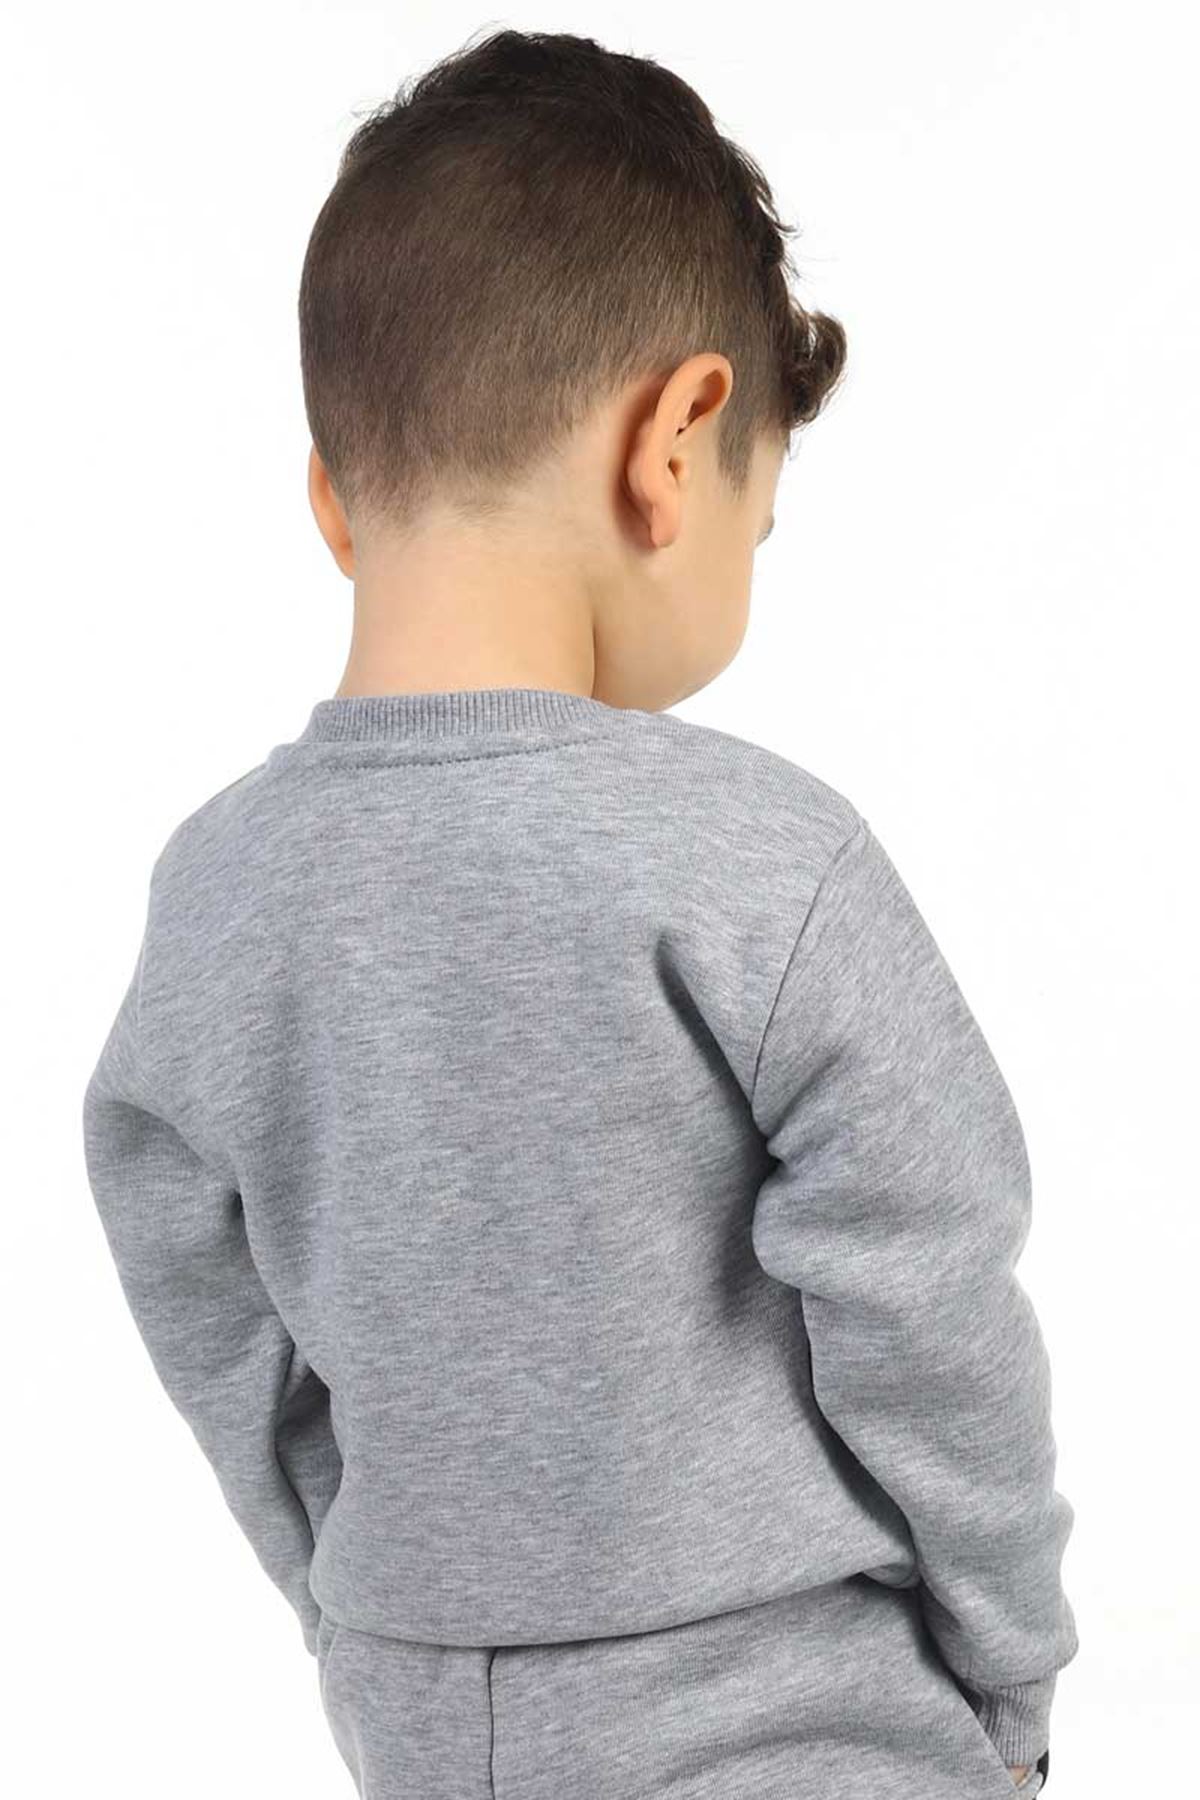 Gray Winter Male Child Sweatshirt